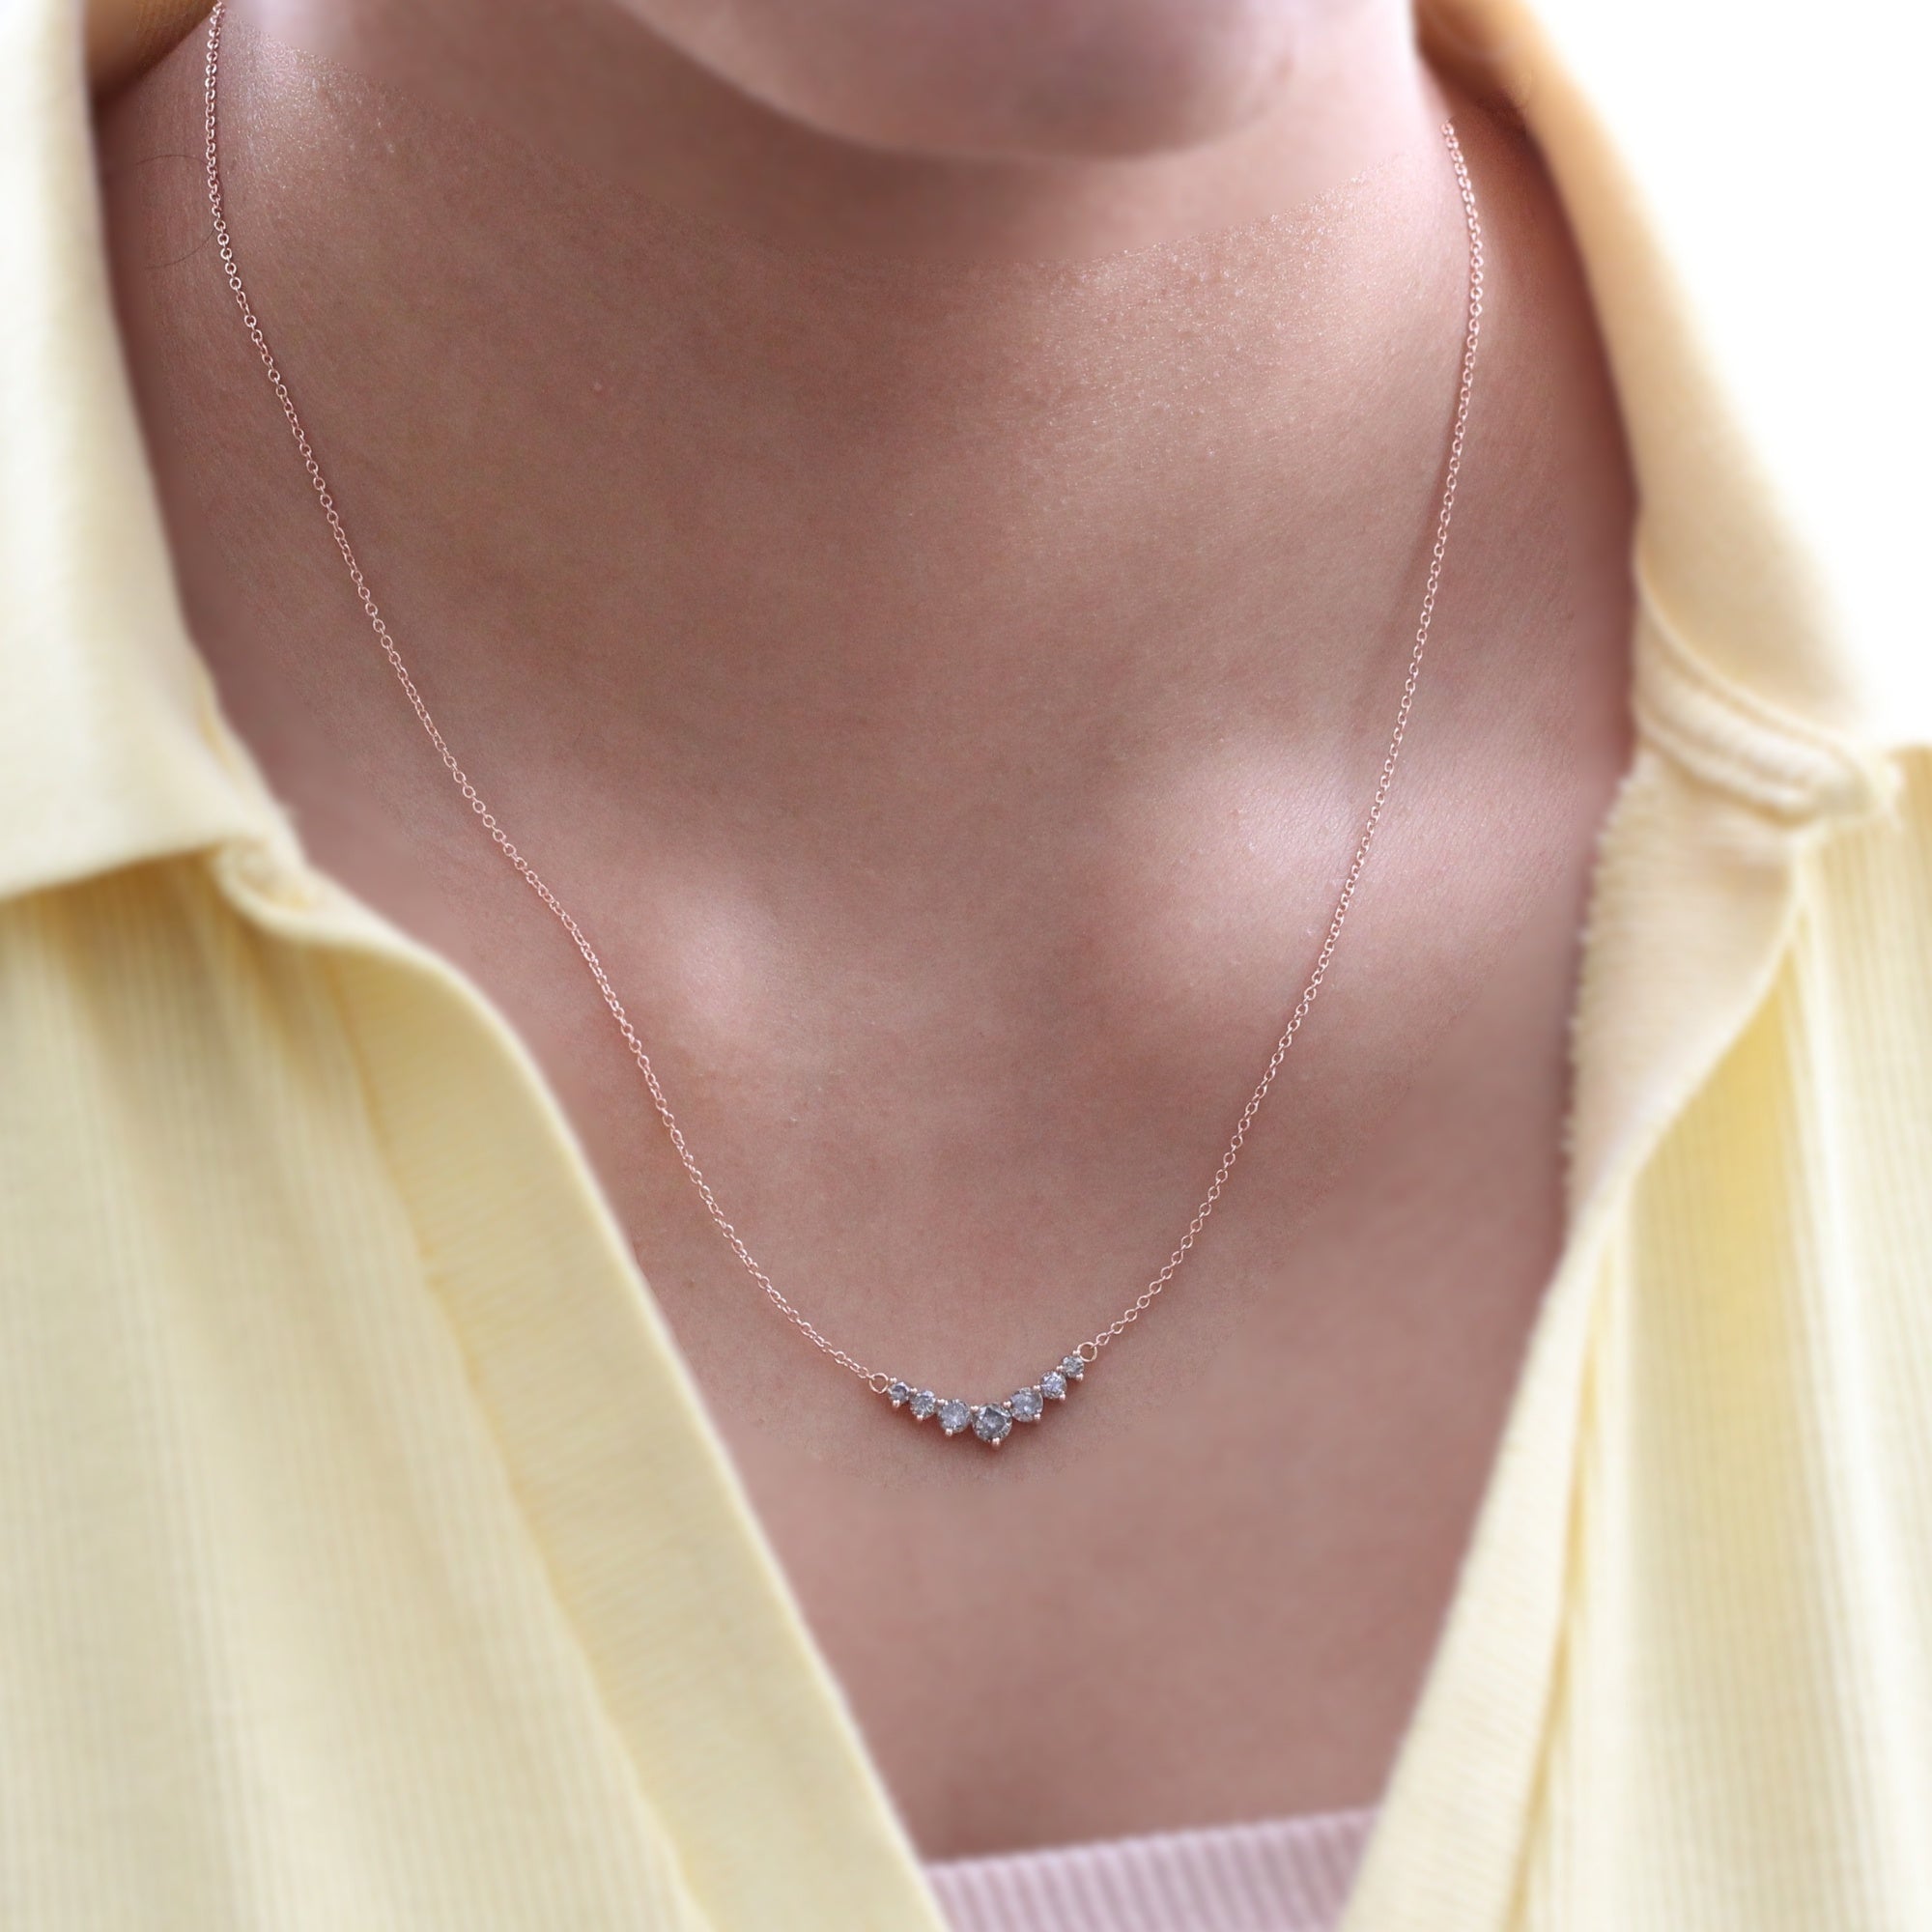 7 salt and pepper diamond necklace rose gold drop pendant chain la more design jewelry